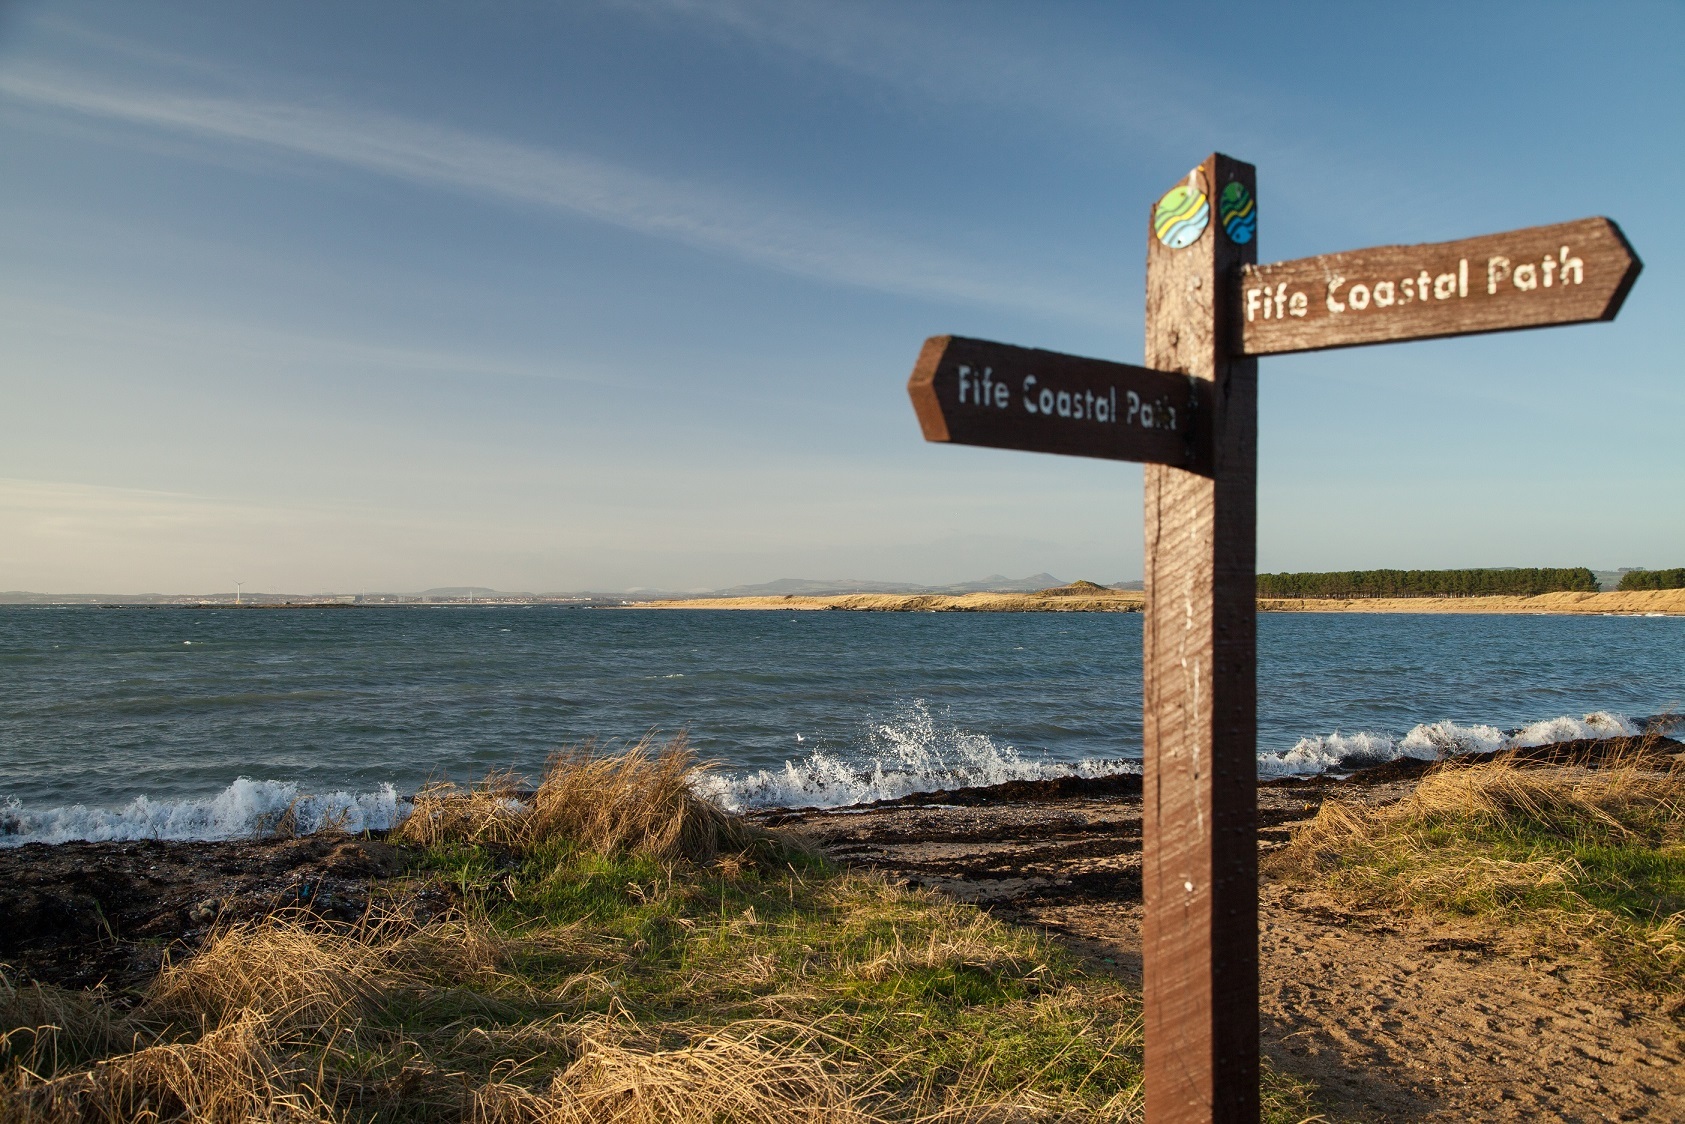 The Fife Coastal Path at Elie.